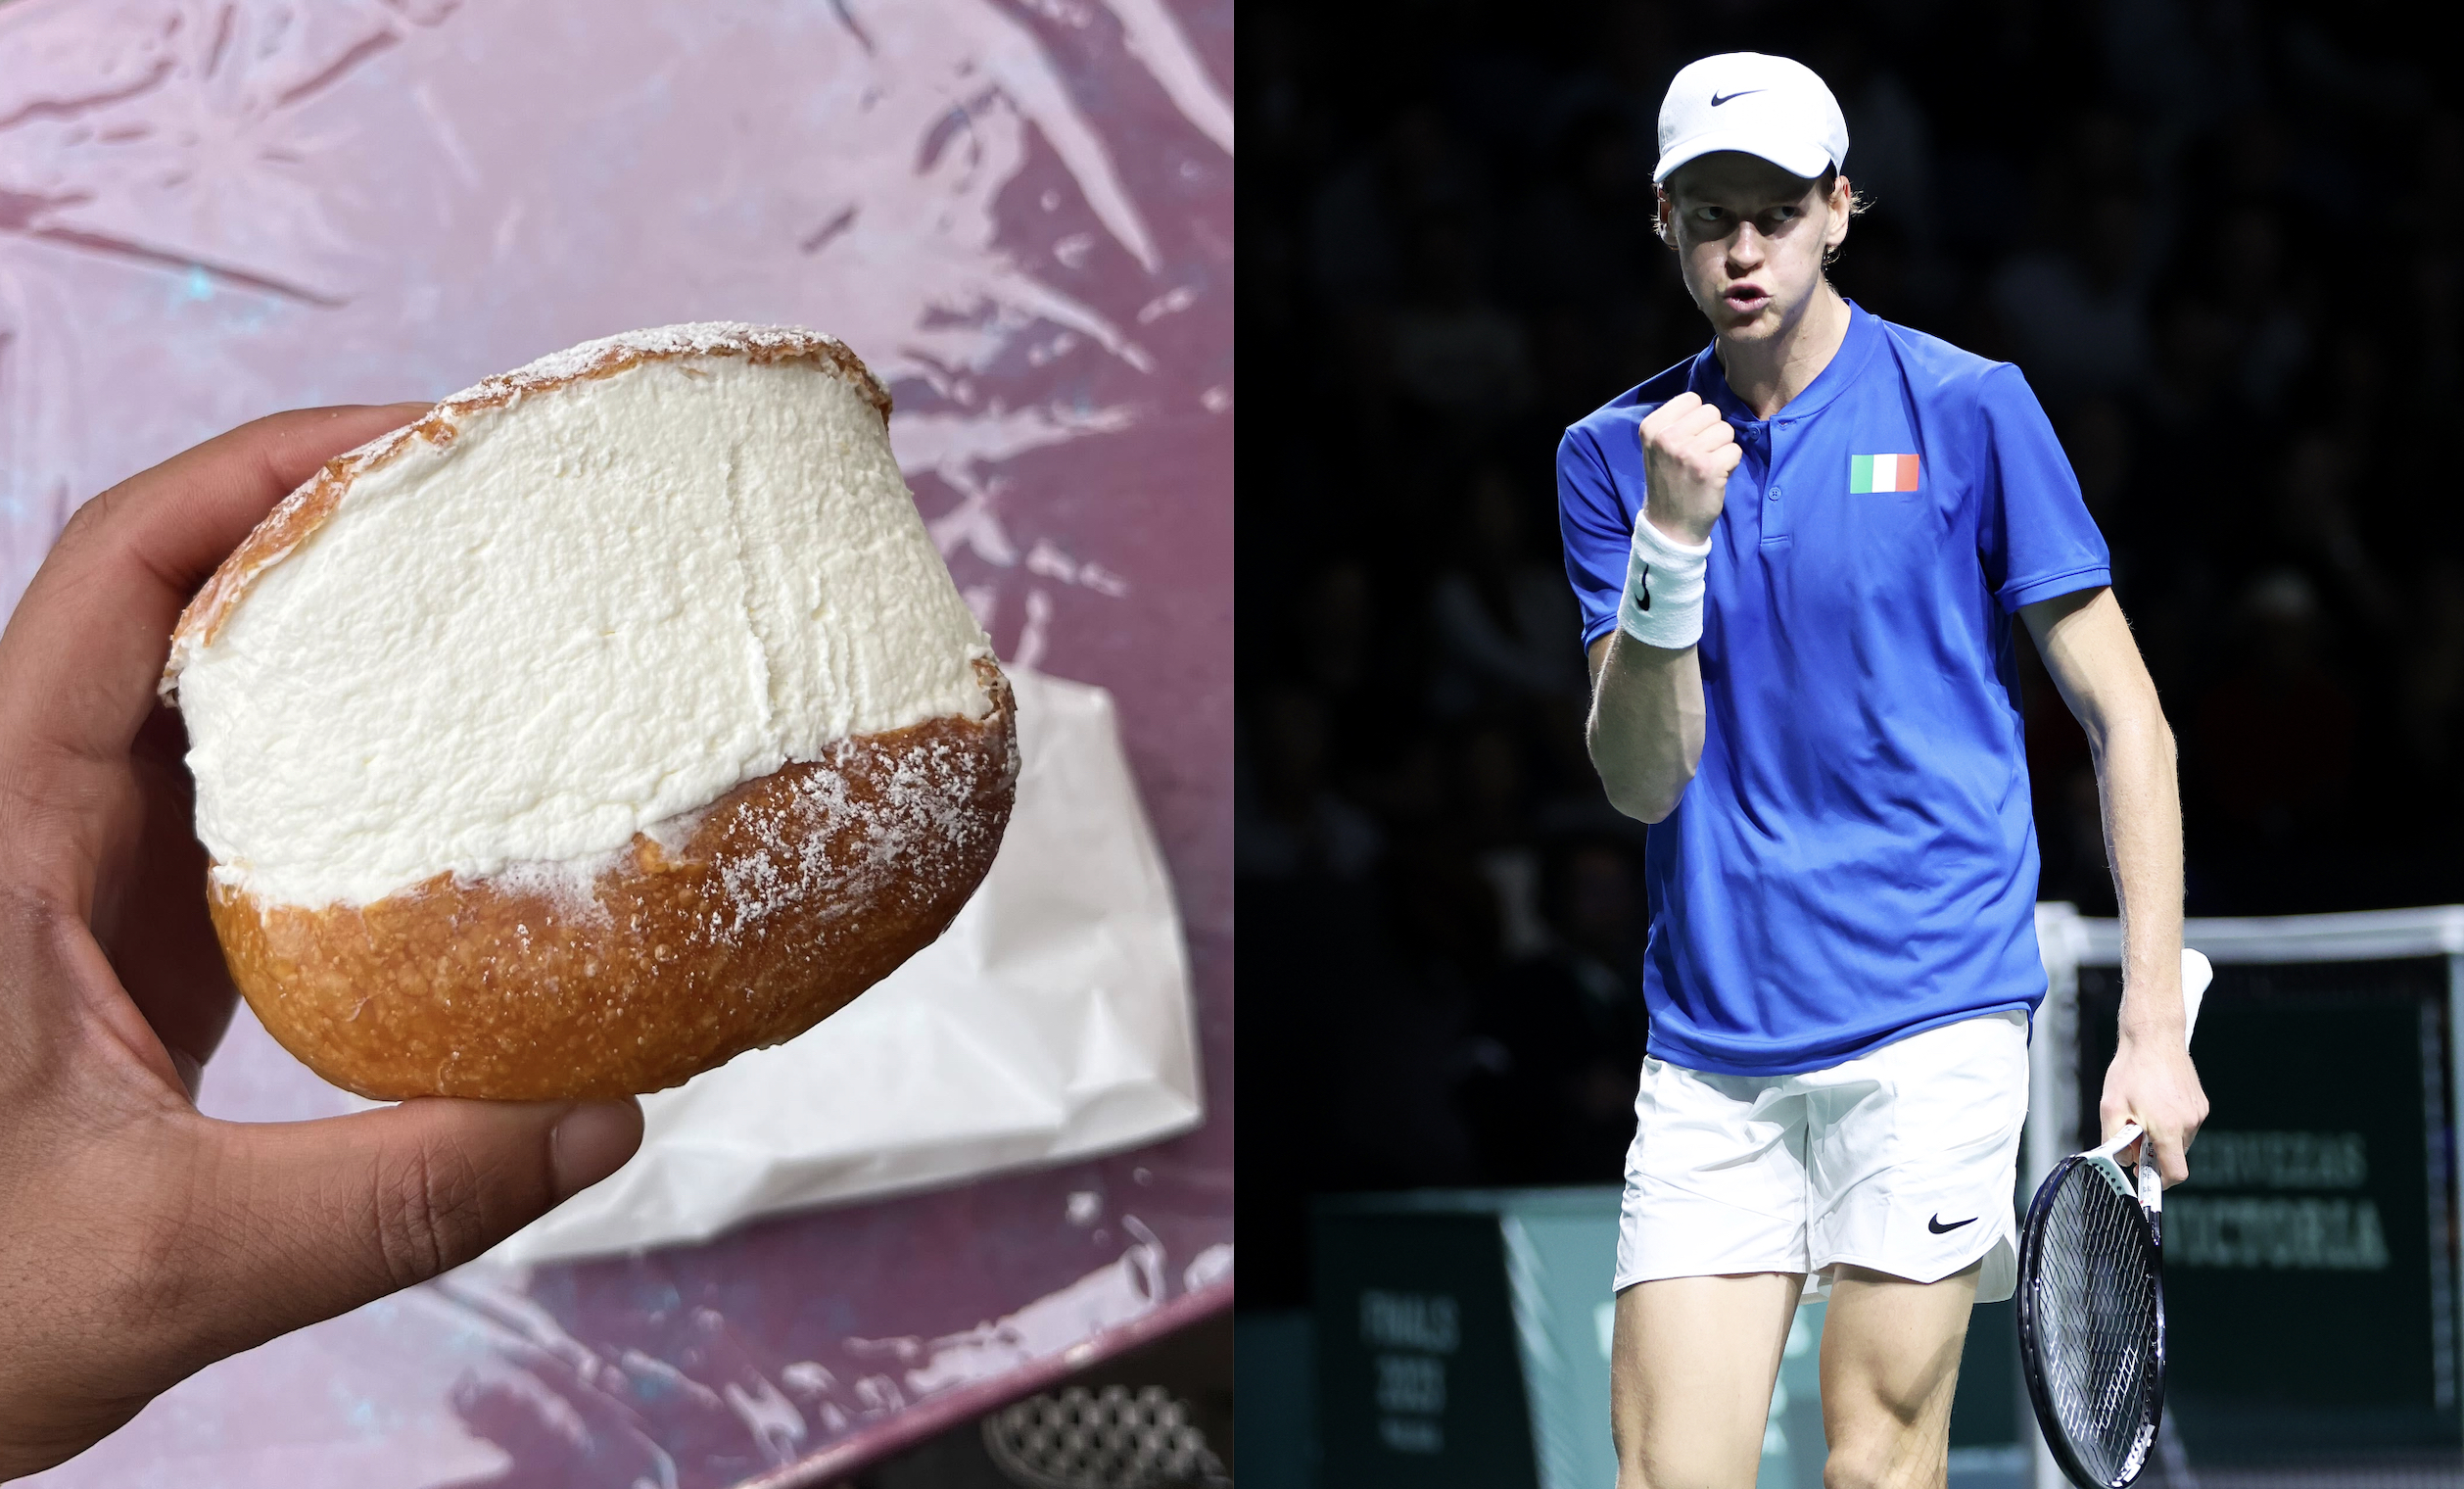 A maritozzo pastry from Rome next to Italian tennis star Jannik Sinner